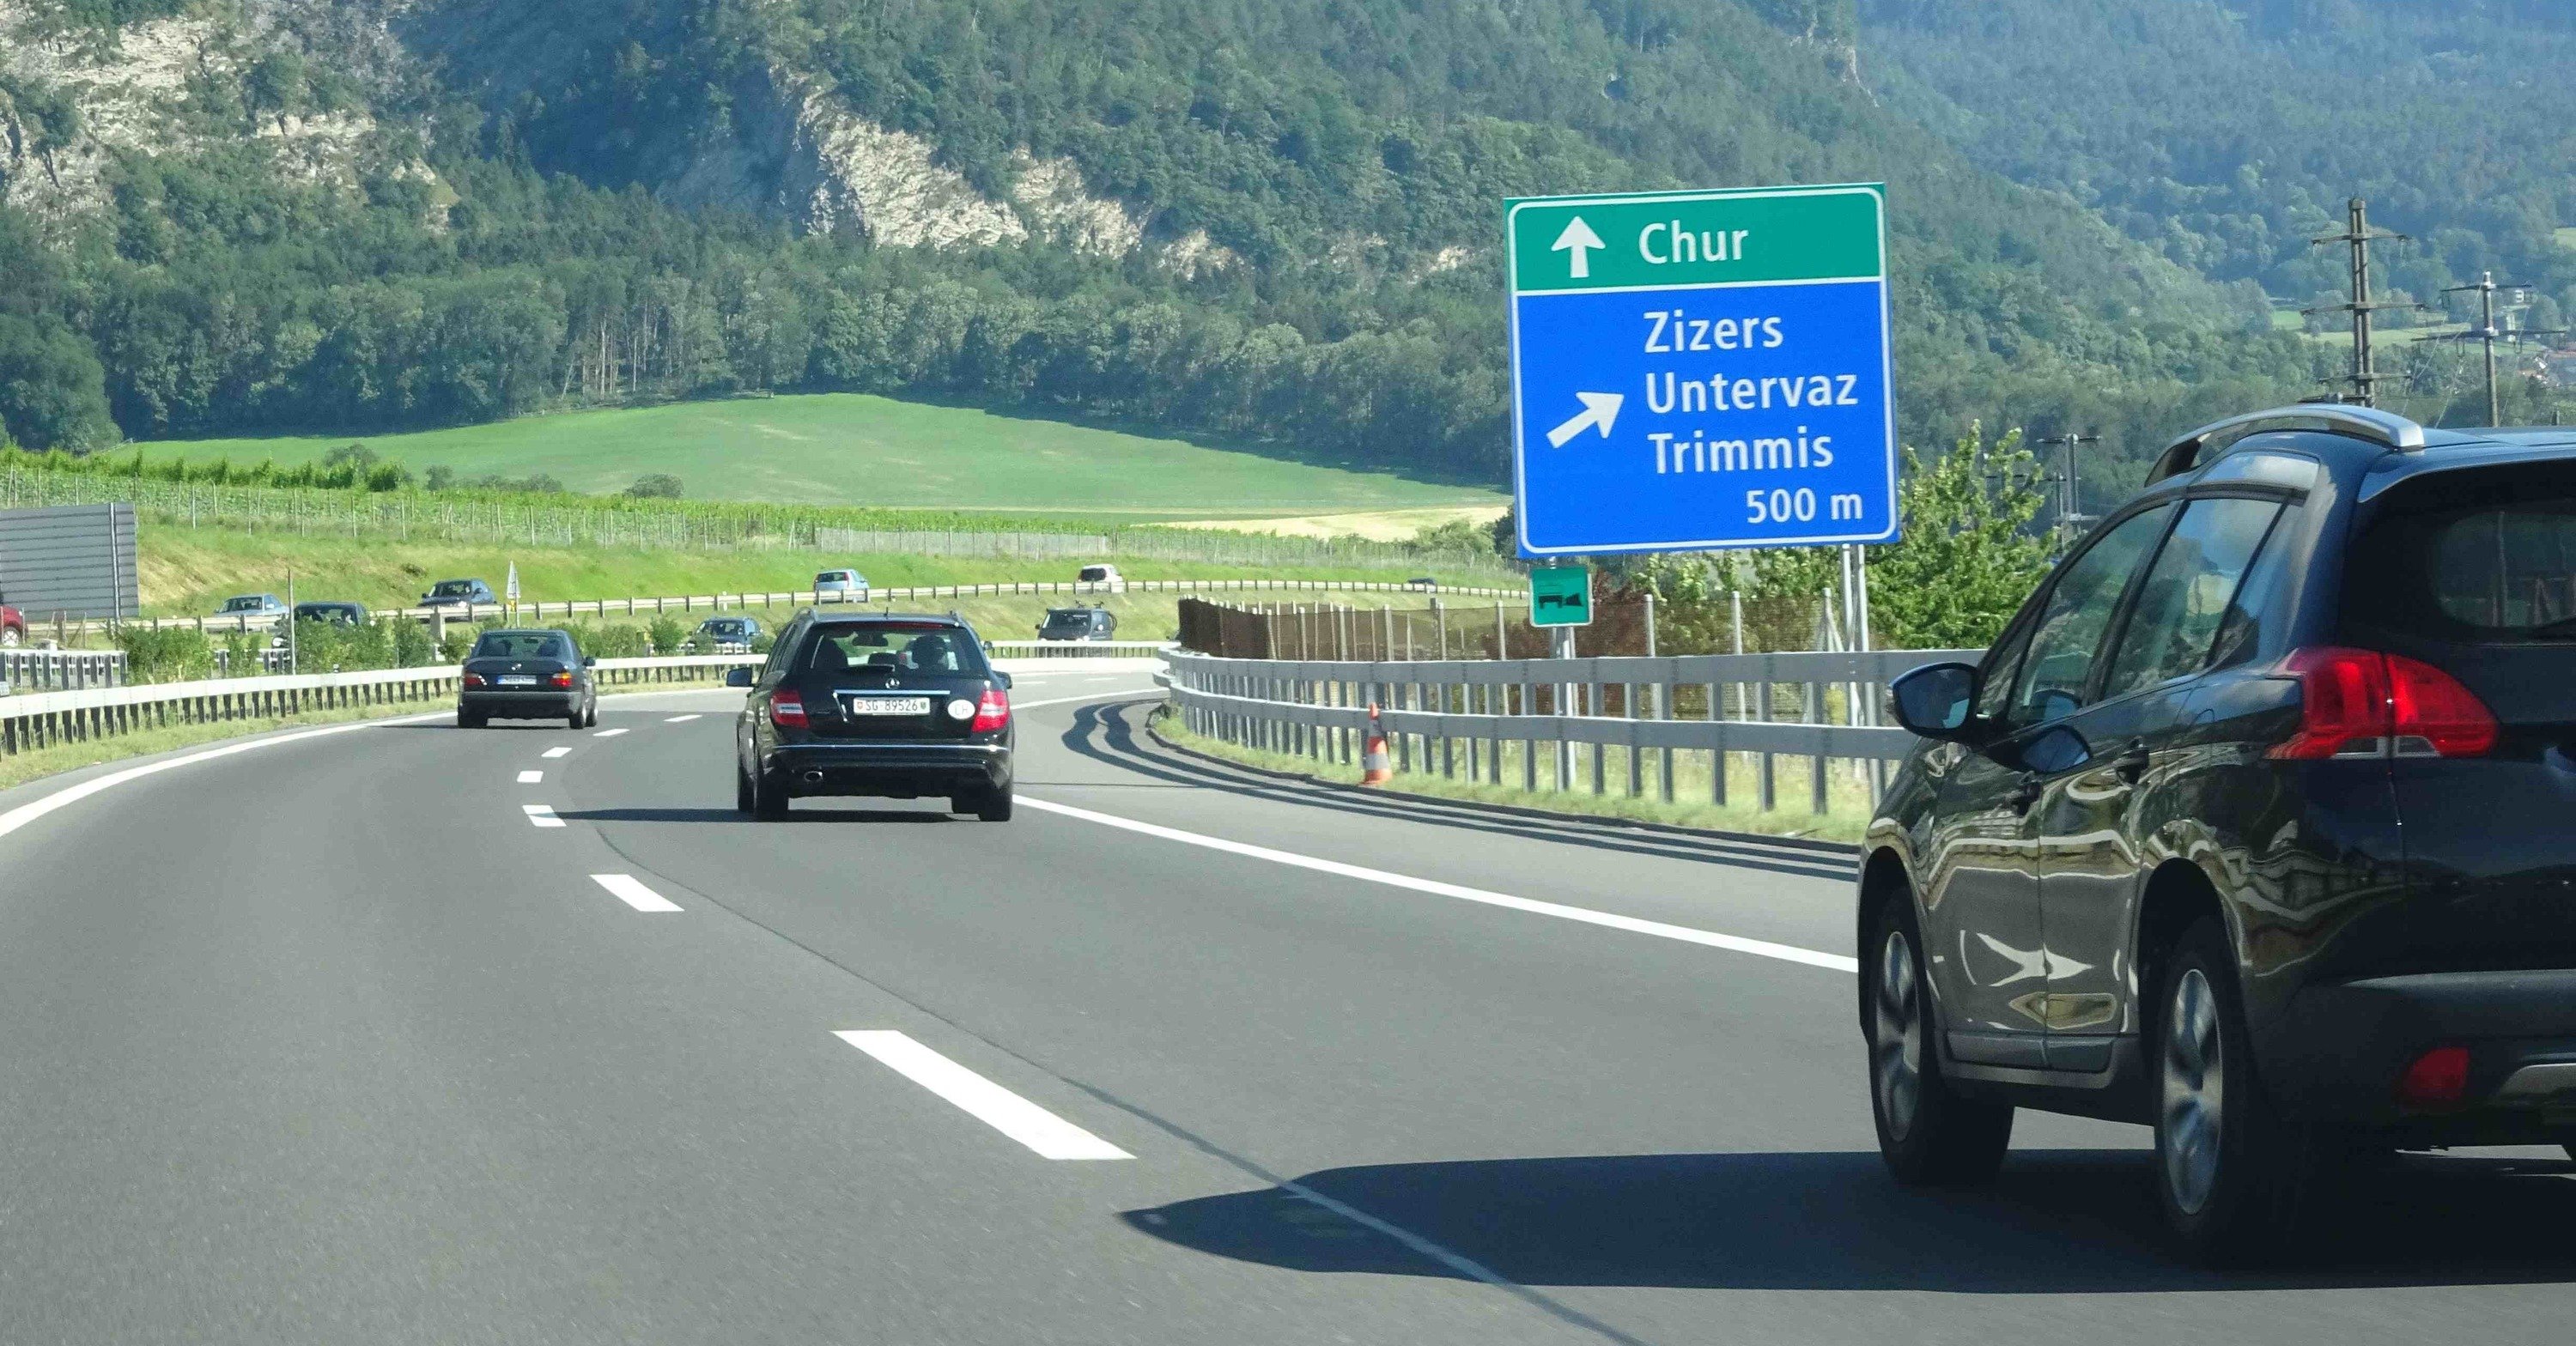 Multe in Svizzera: autovelox da 47 km/h, 4 giorni di prigione